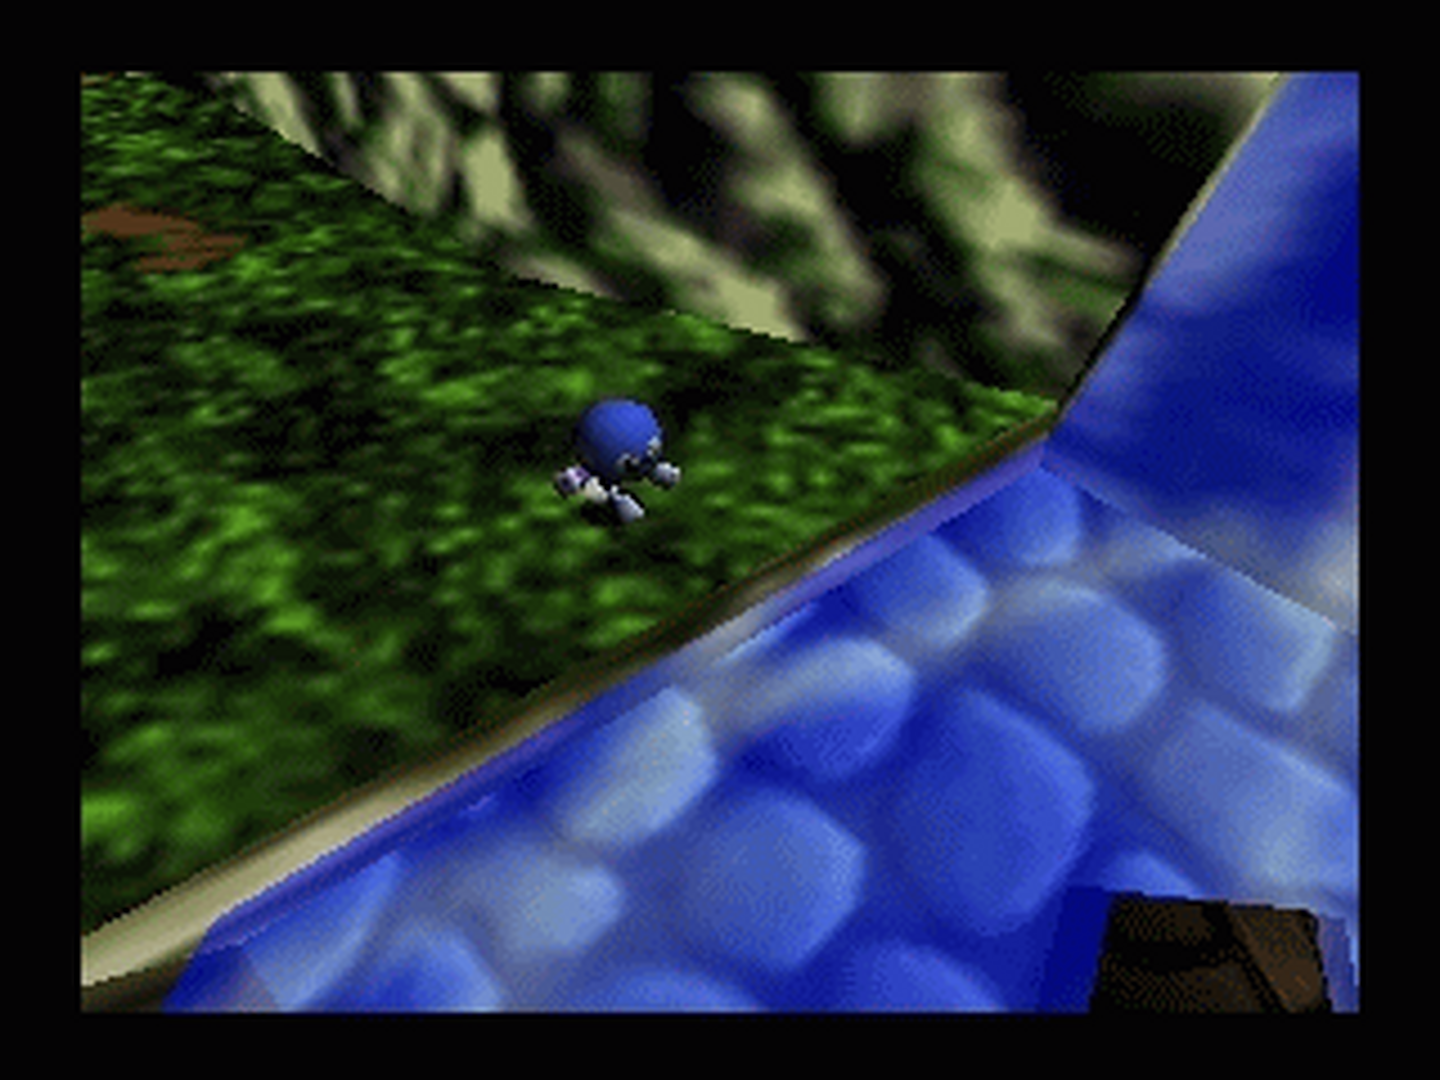 N64 GameBase Chameleon_Twist_(U)_(V1.0) SunSoft 1997